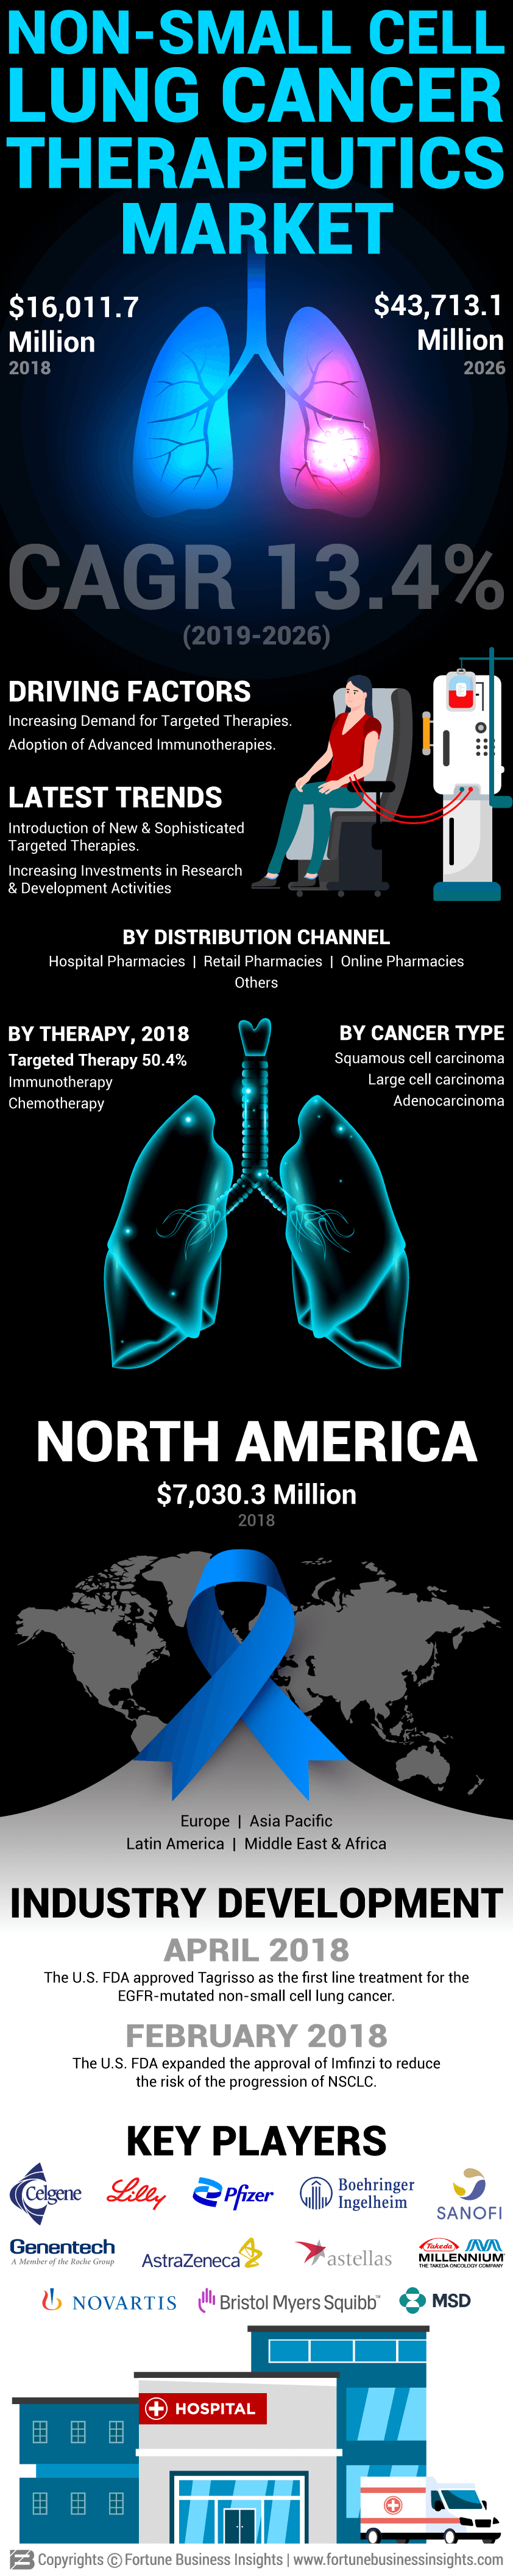 Non-Small Cell Lung Cancer Therapeutics Market